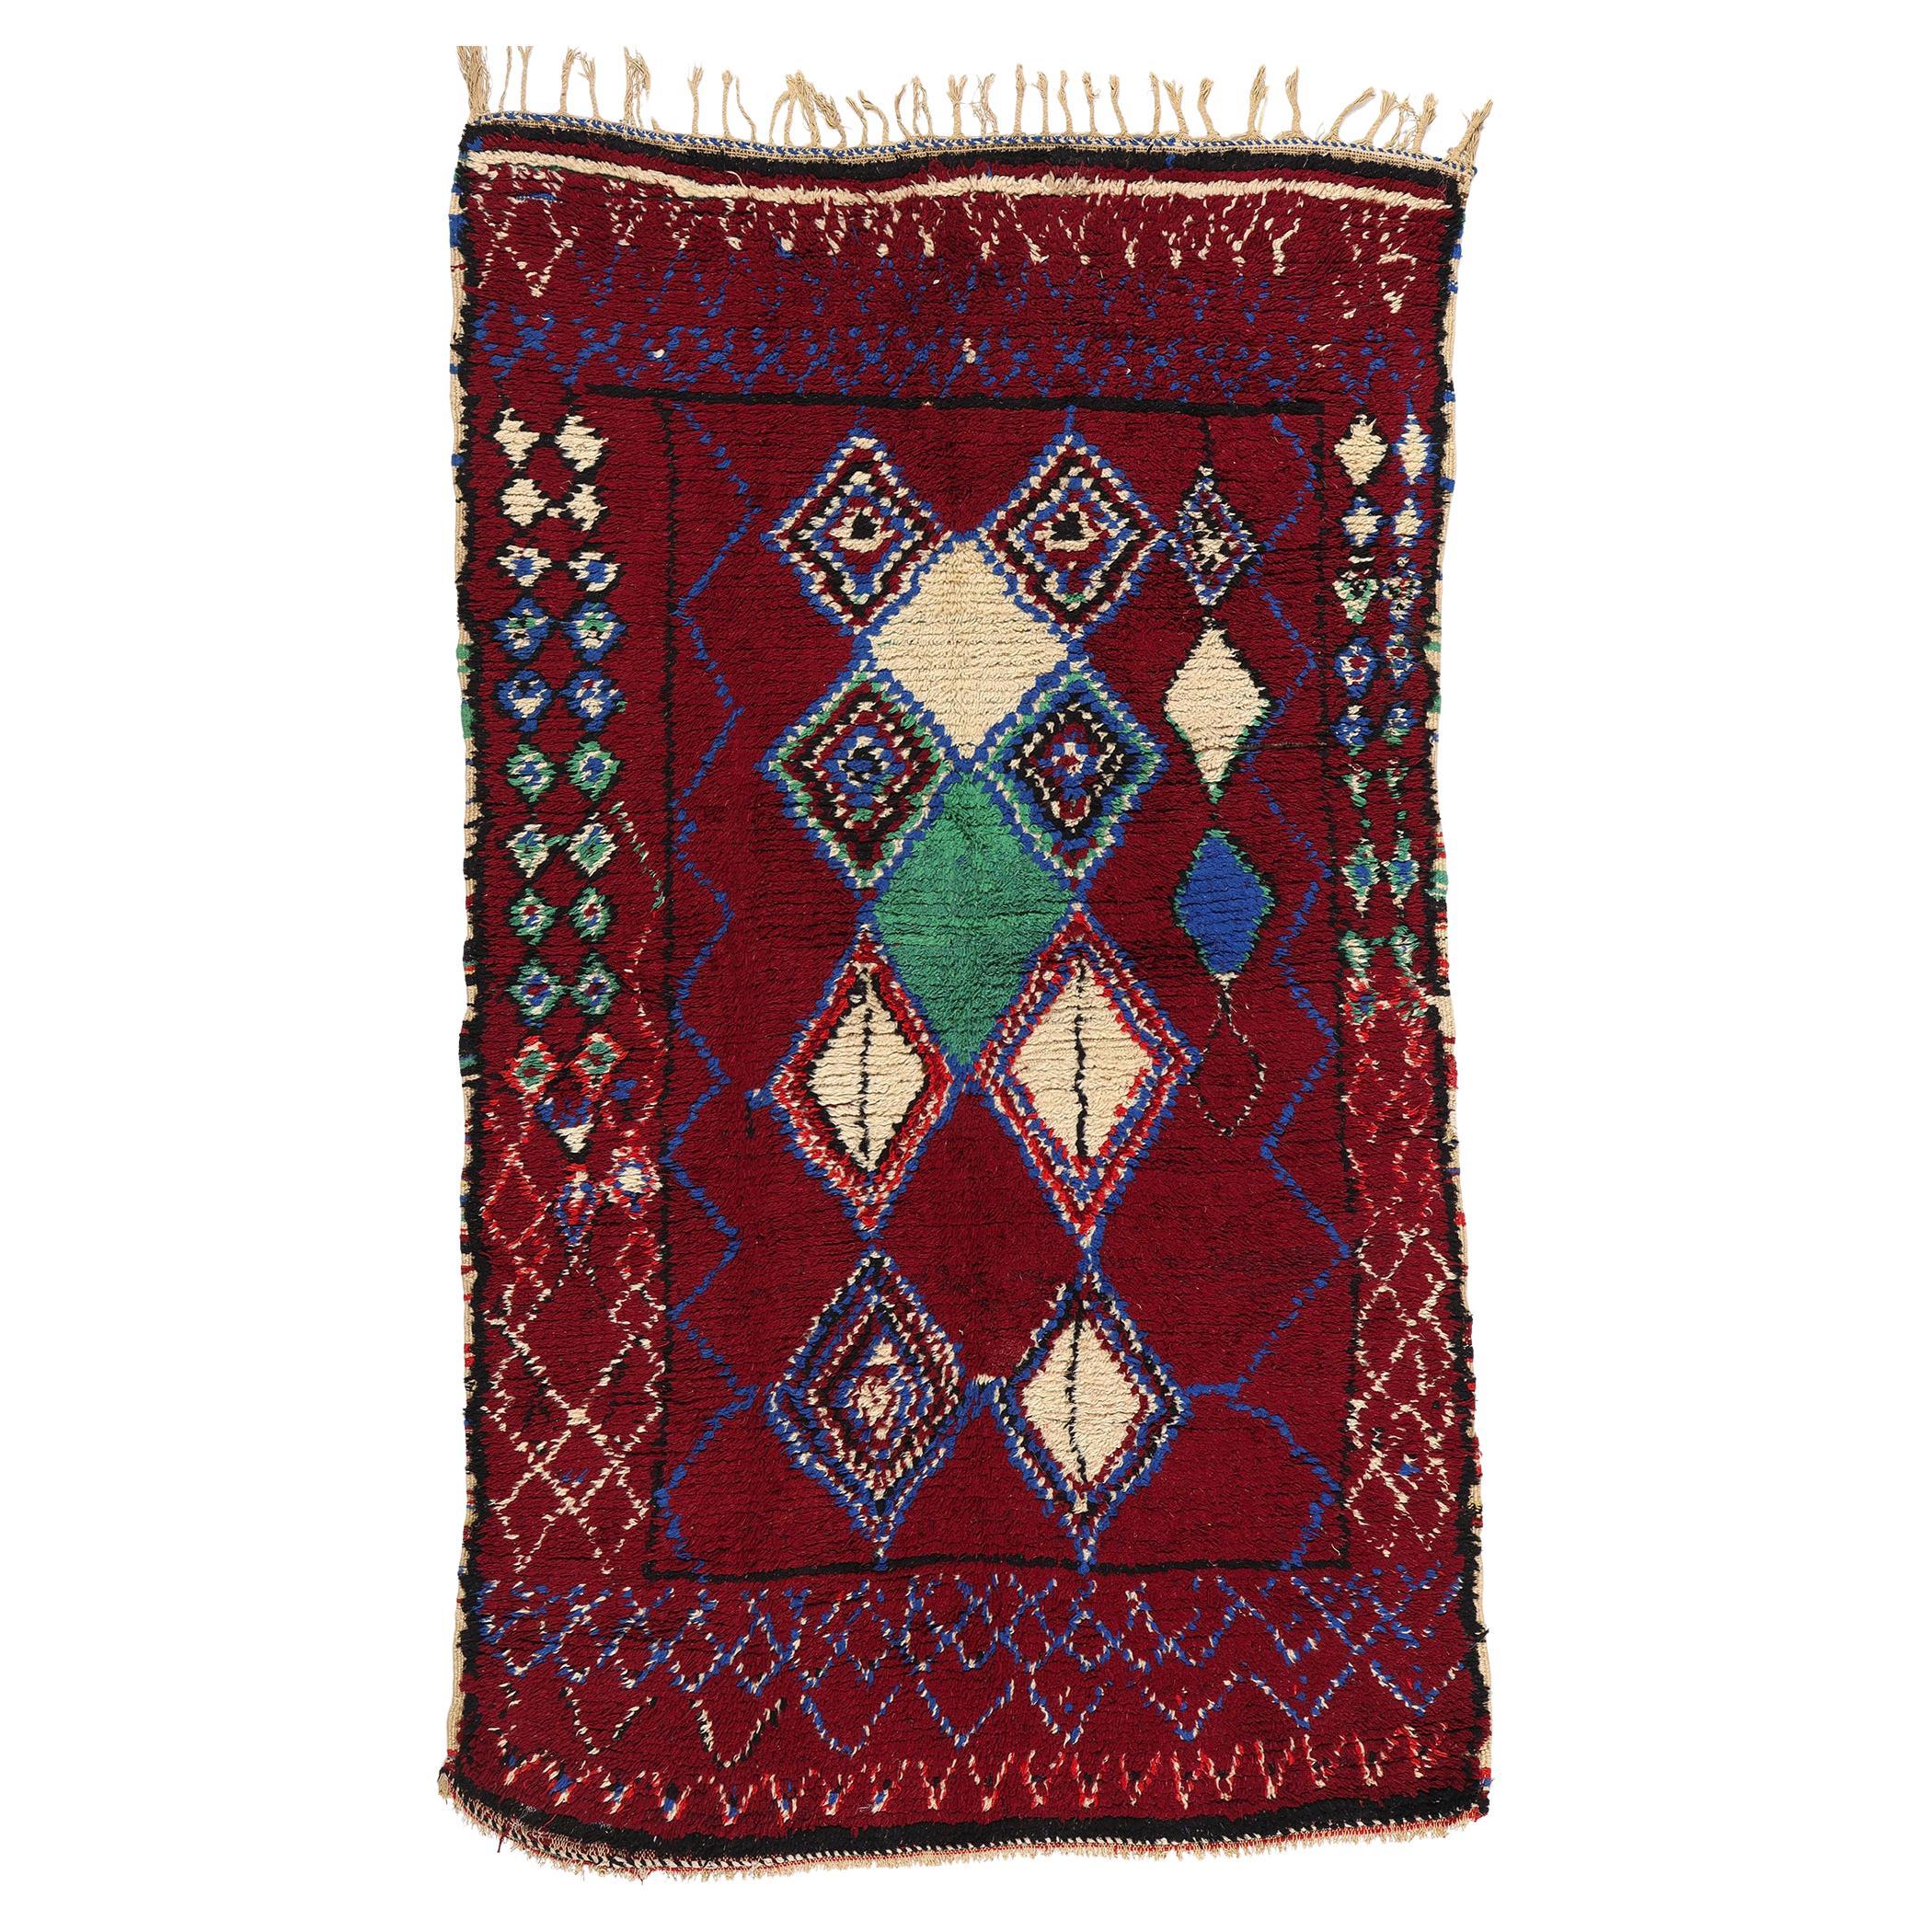 Vintage Berber Moroccan Azilal Rug, Cozy Boho Chic Meets Tribal Enchantment